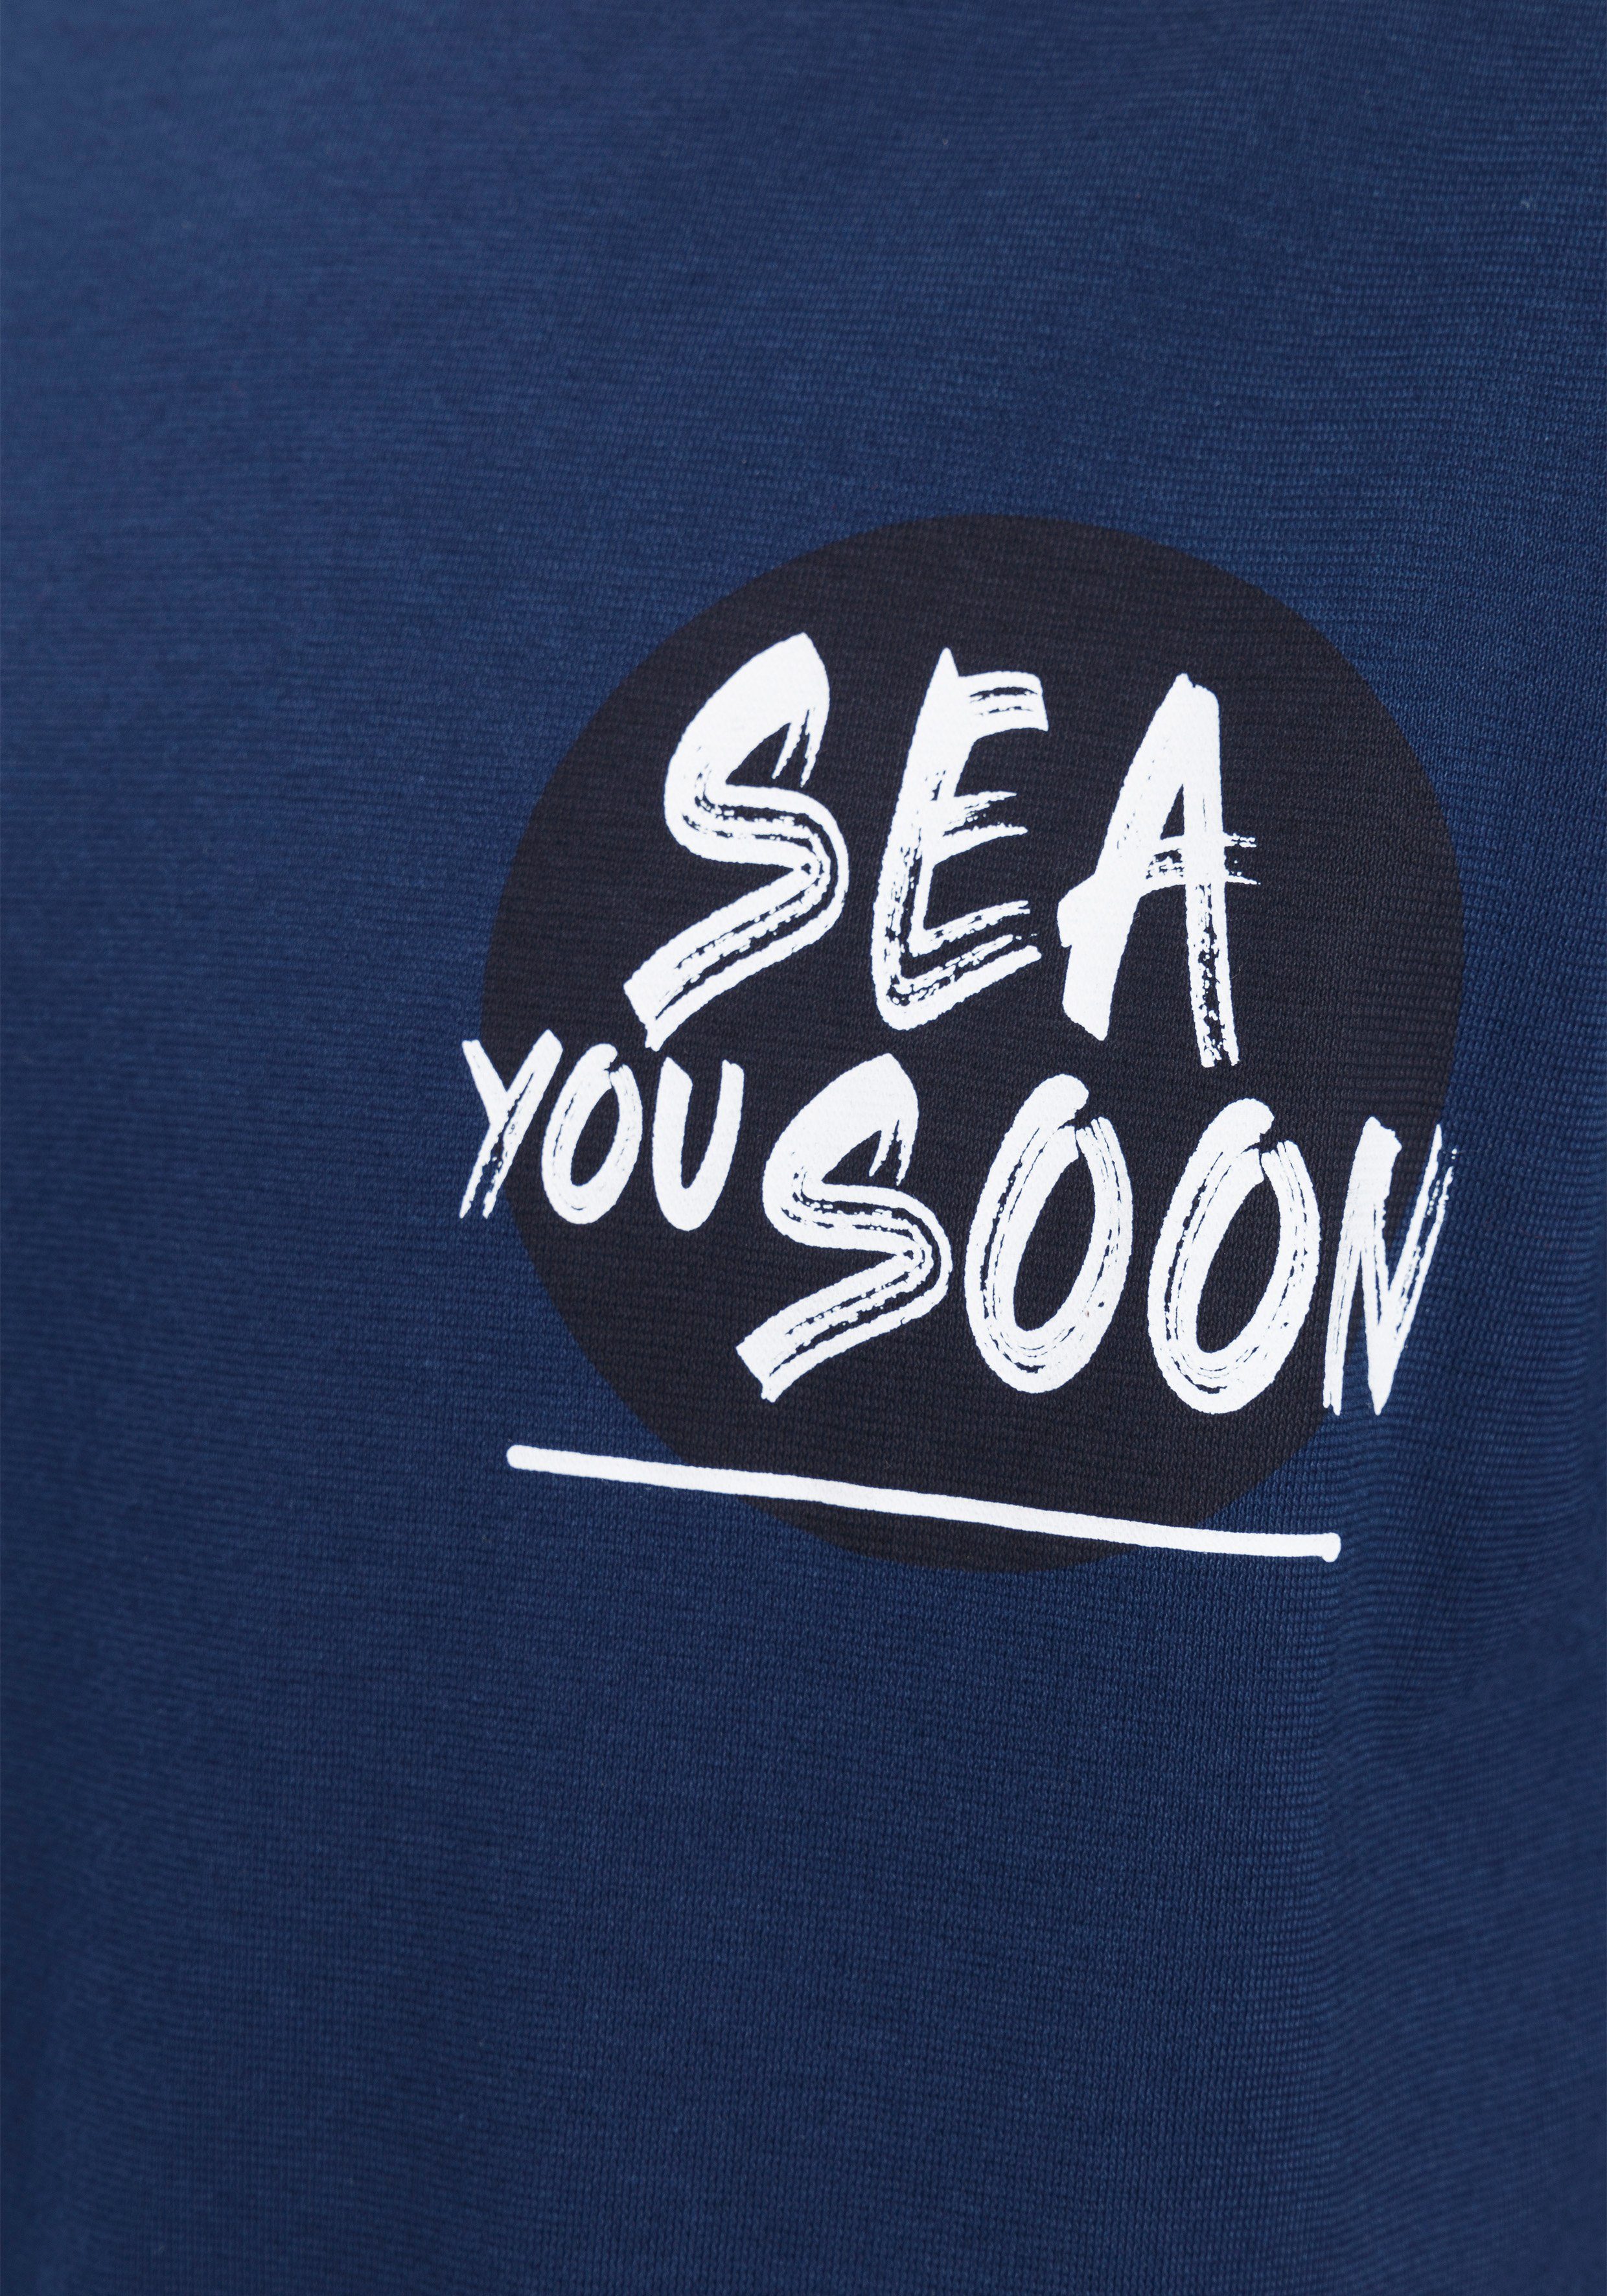 marine-bedruckt mit Logoprint T-Shirt OLYMP